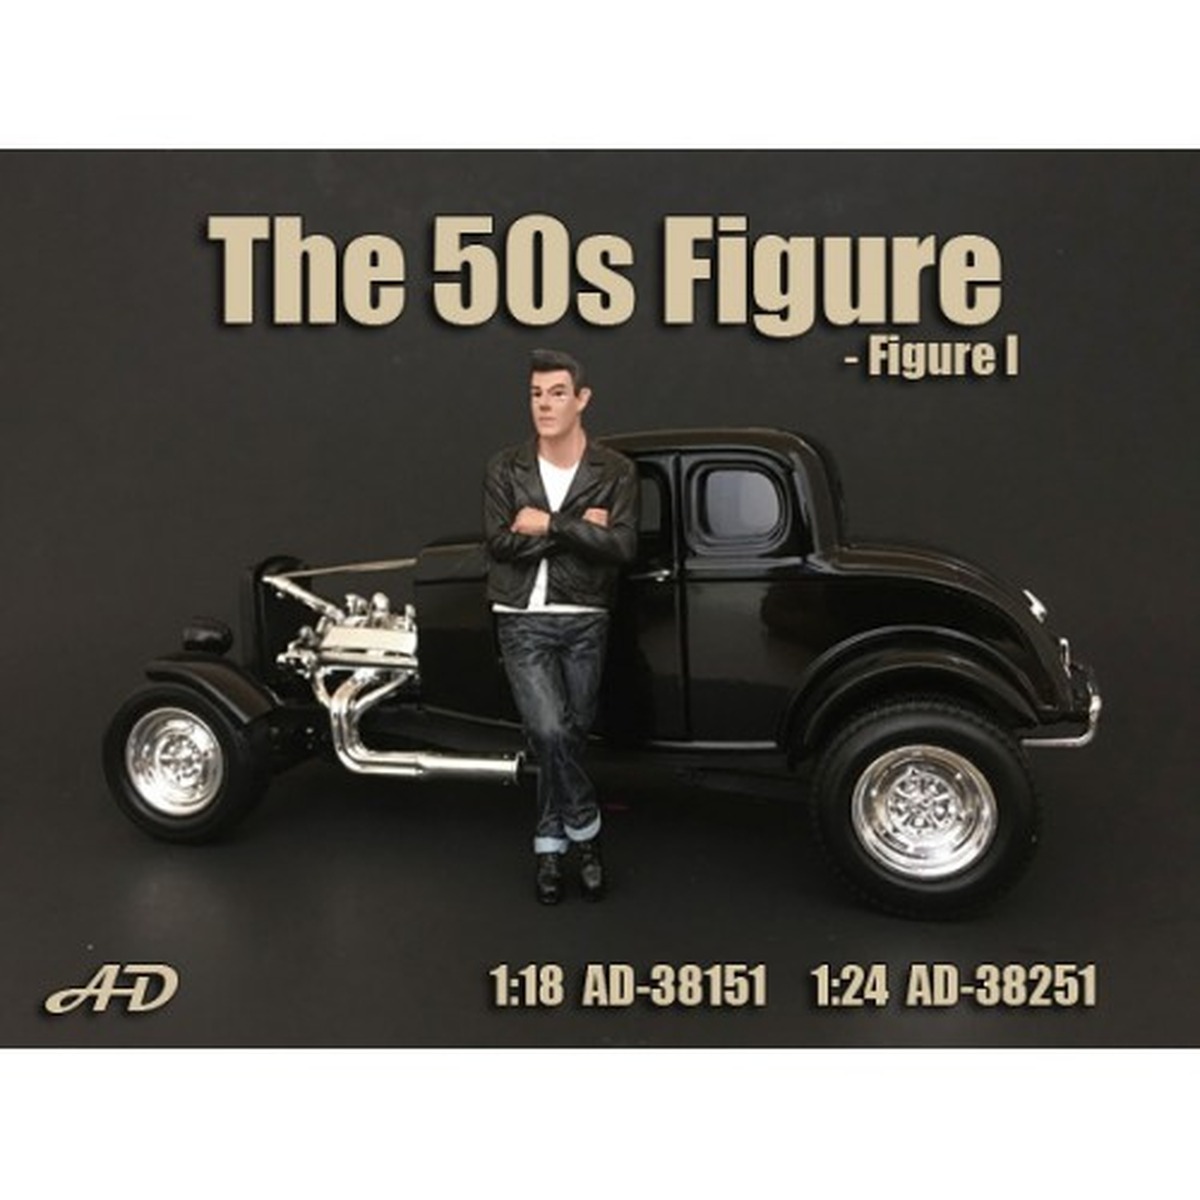 1:24 Scale American Diorama 50's Figures